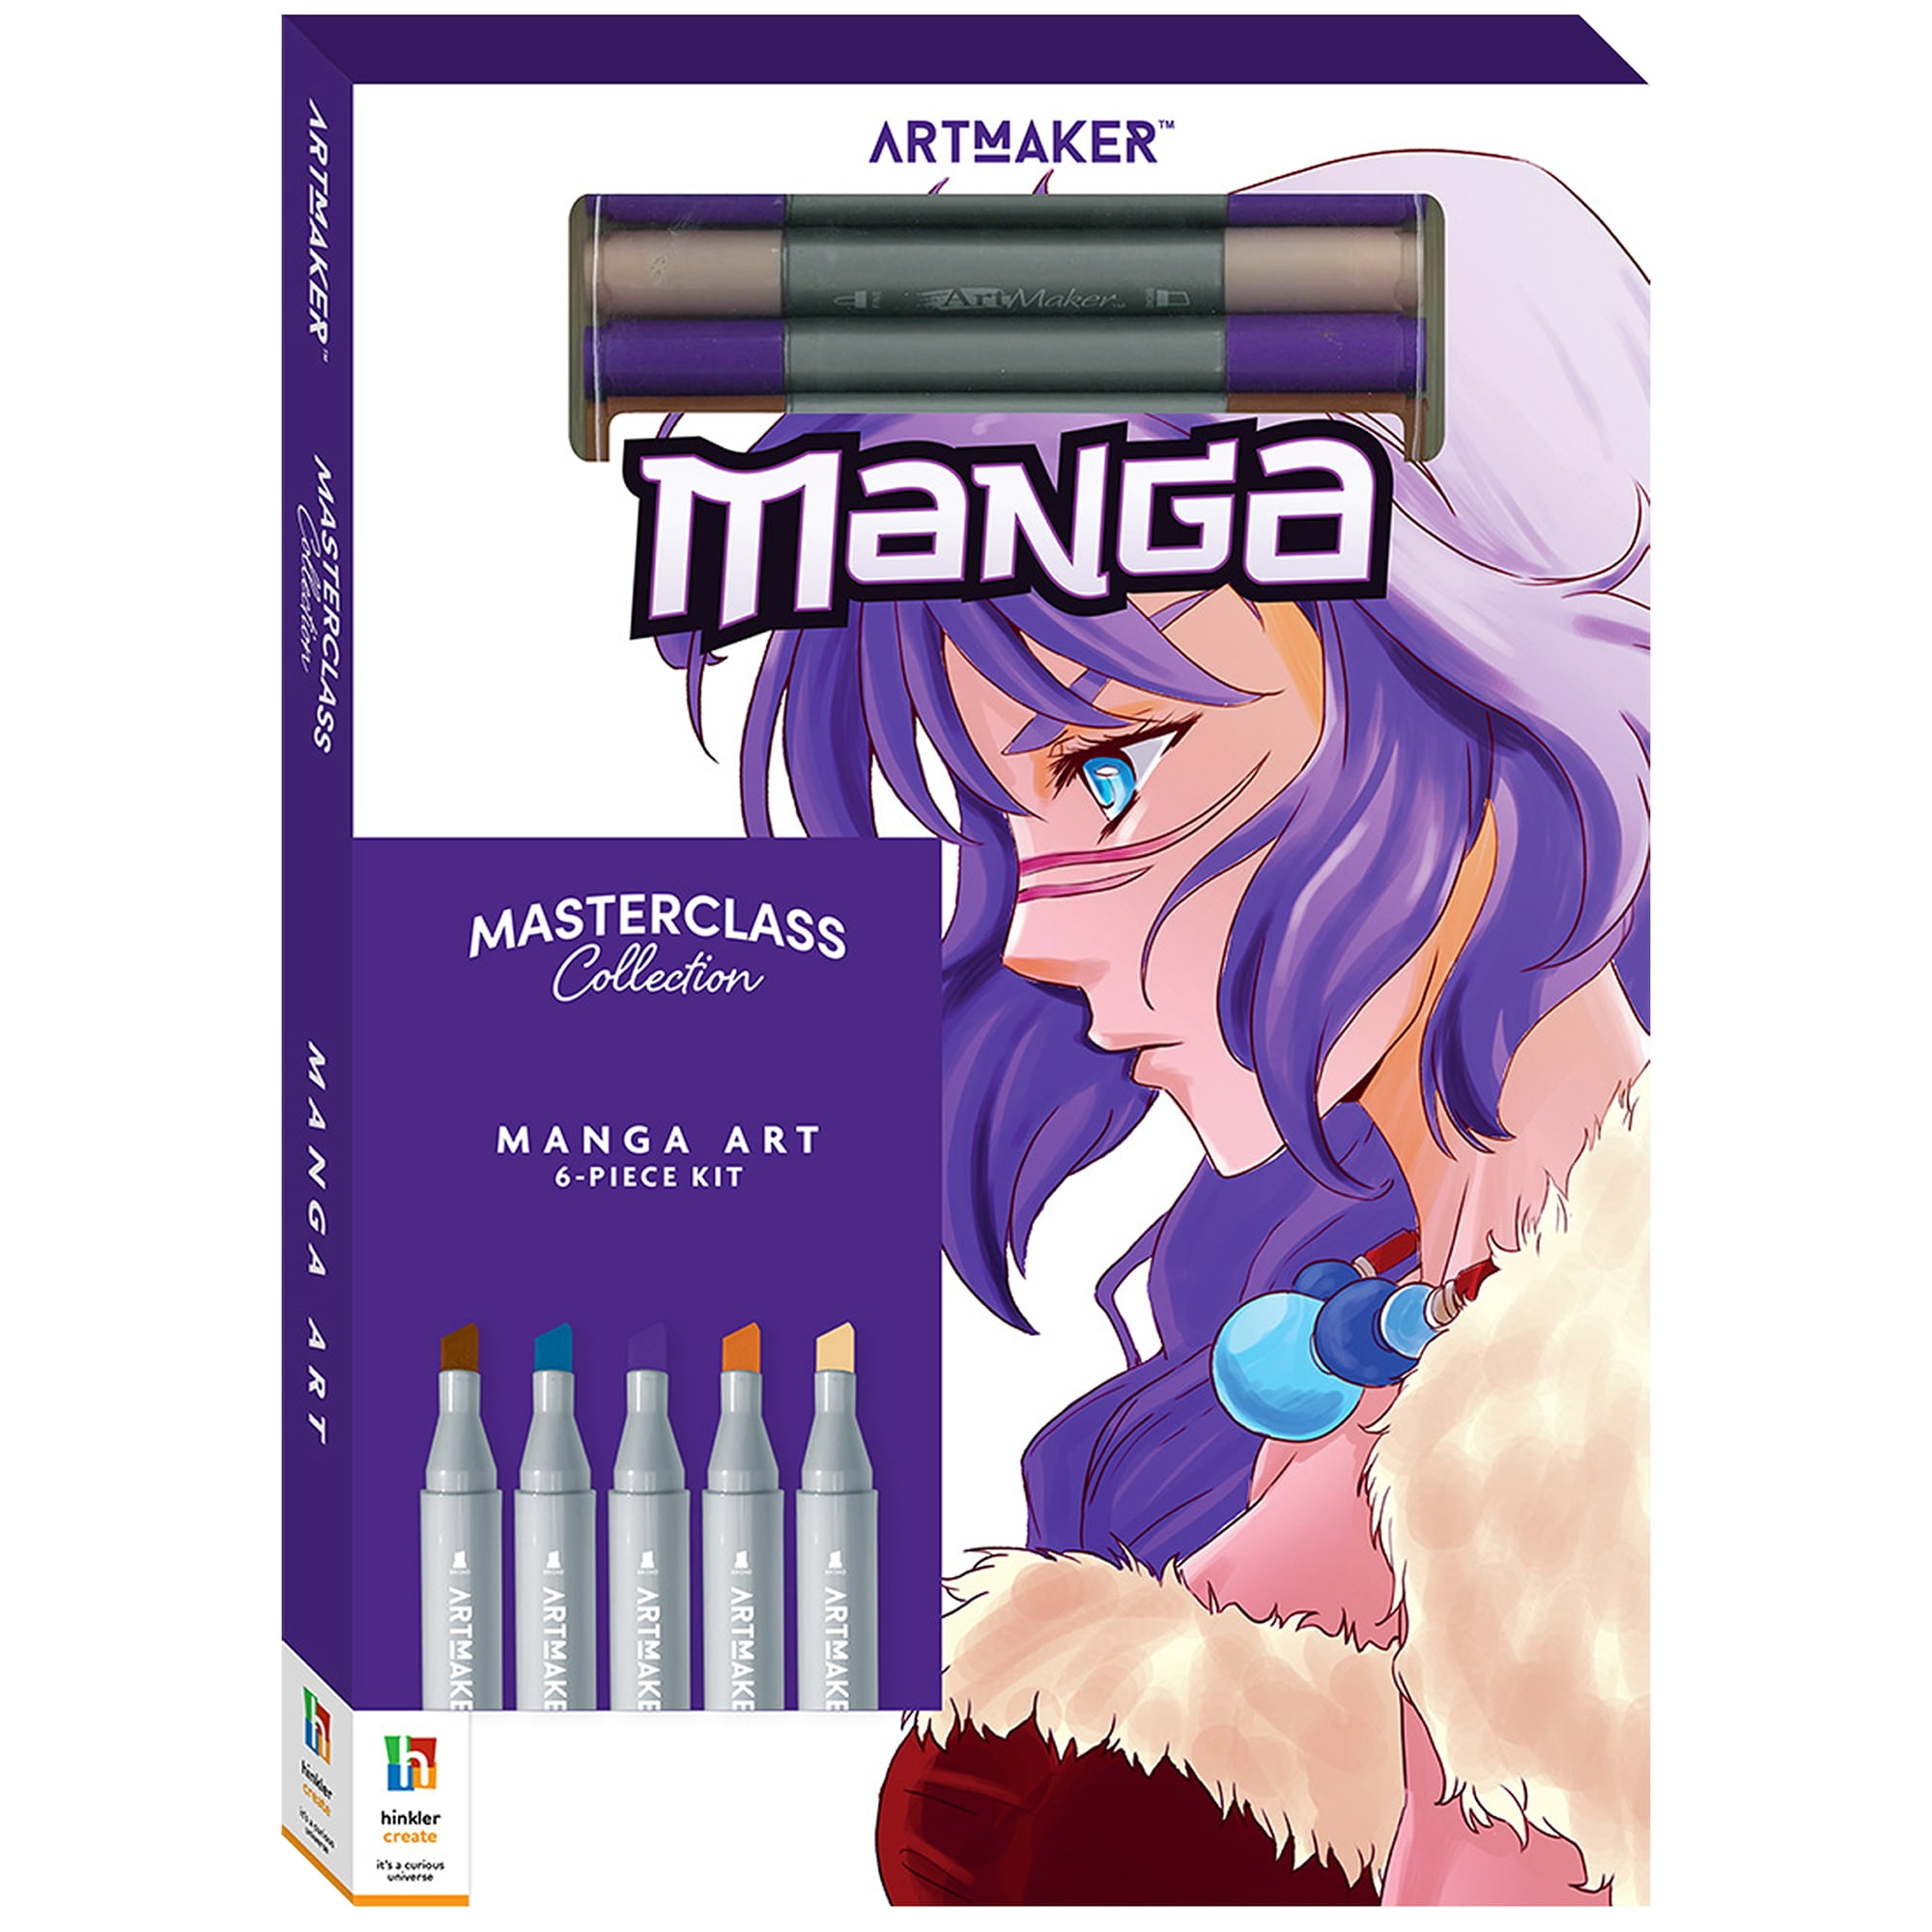 Drawing Manga - Art Kit for Beginners at Weekend Kits